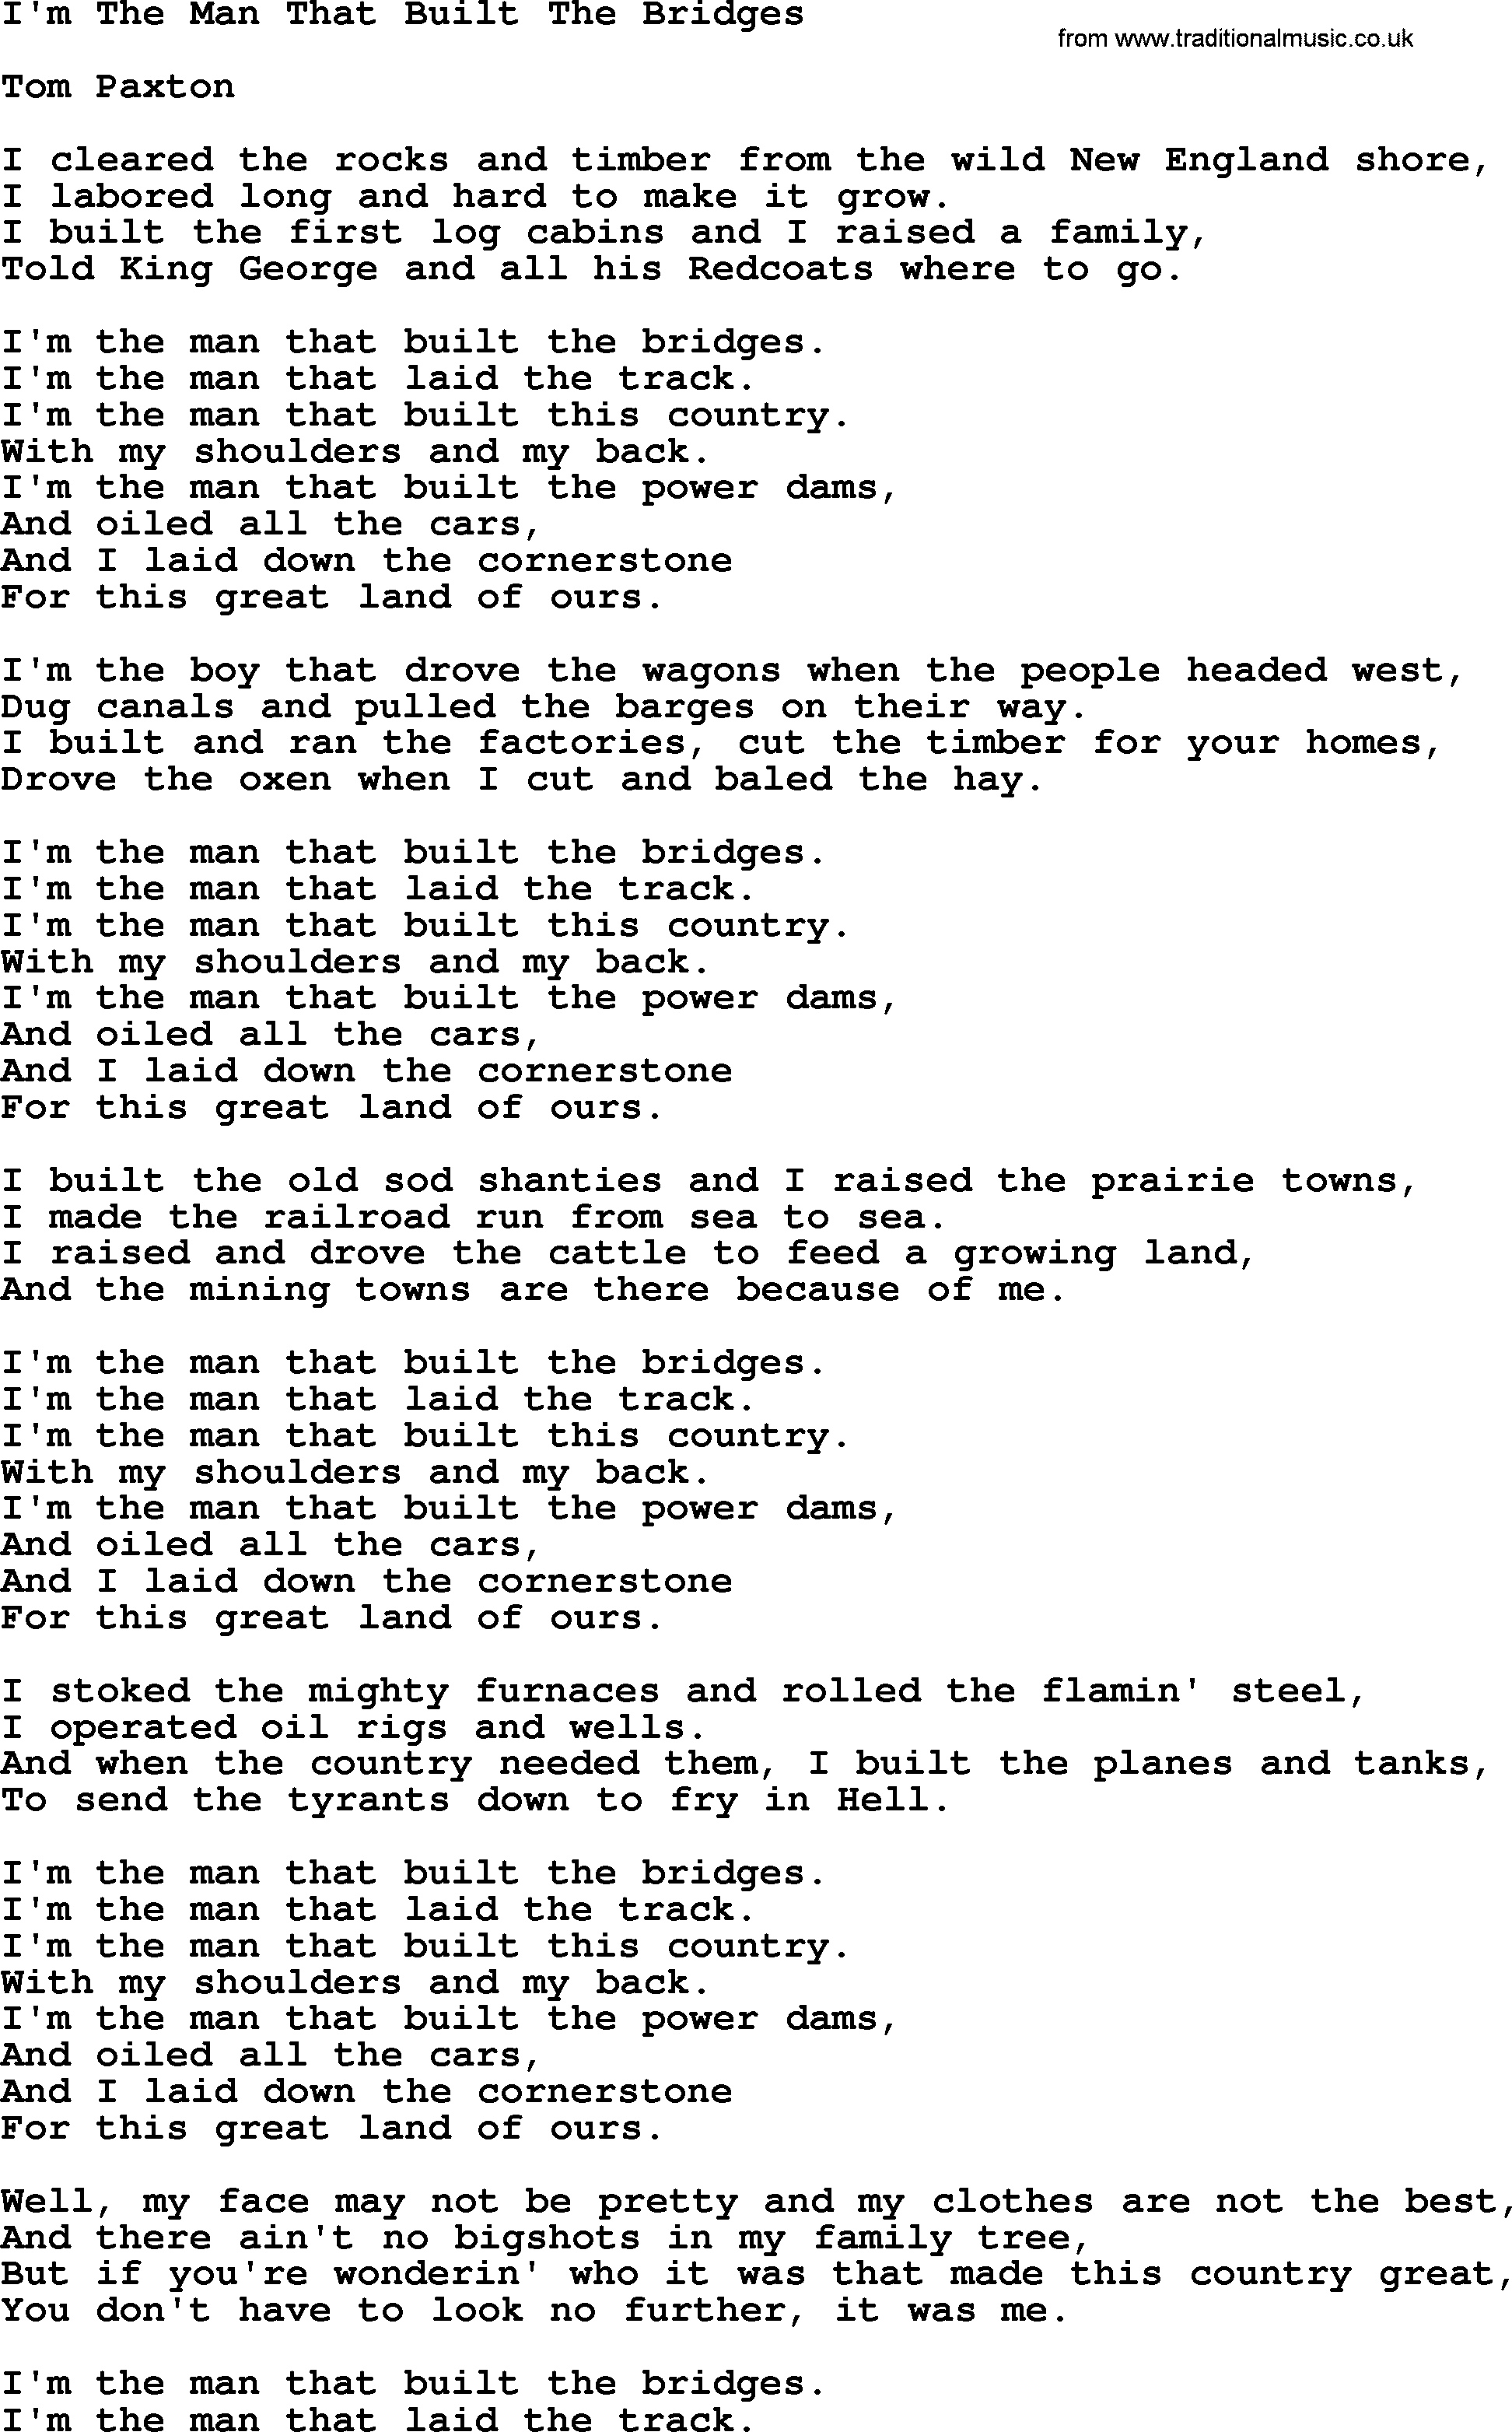 Tom Paxton song: I'm The Man That Built The Bridges, lyrics